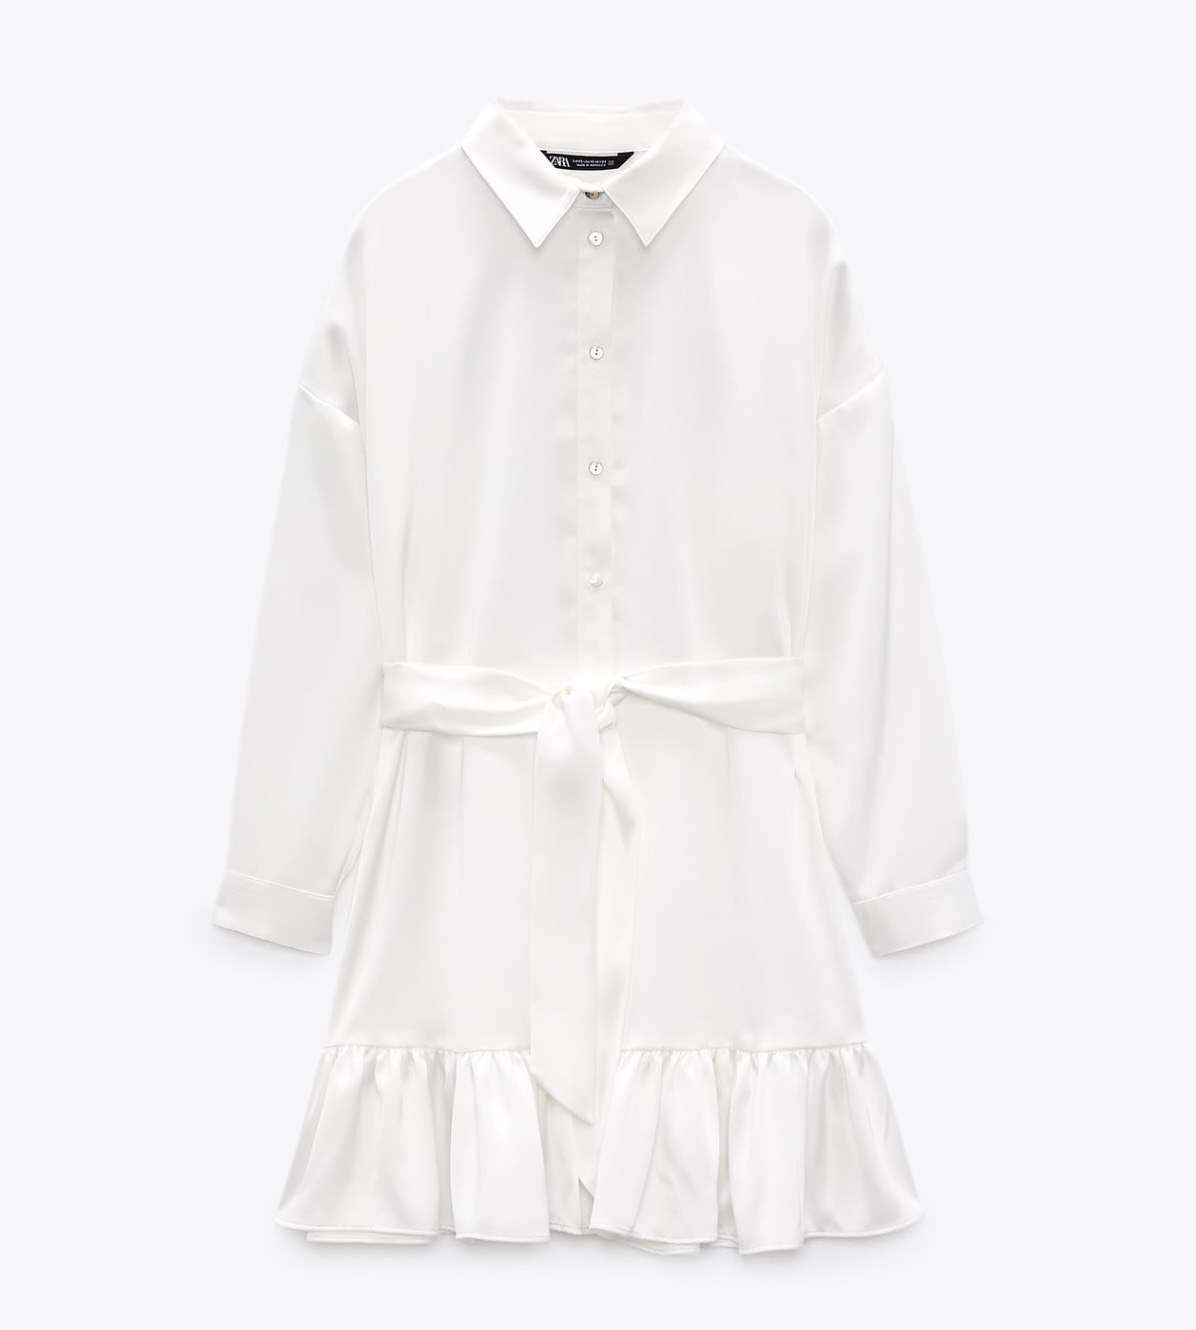 Vestido blanco camisero de Zara